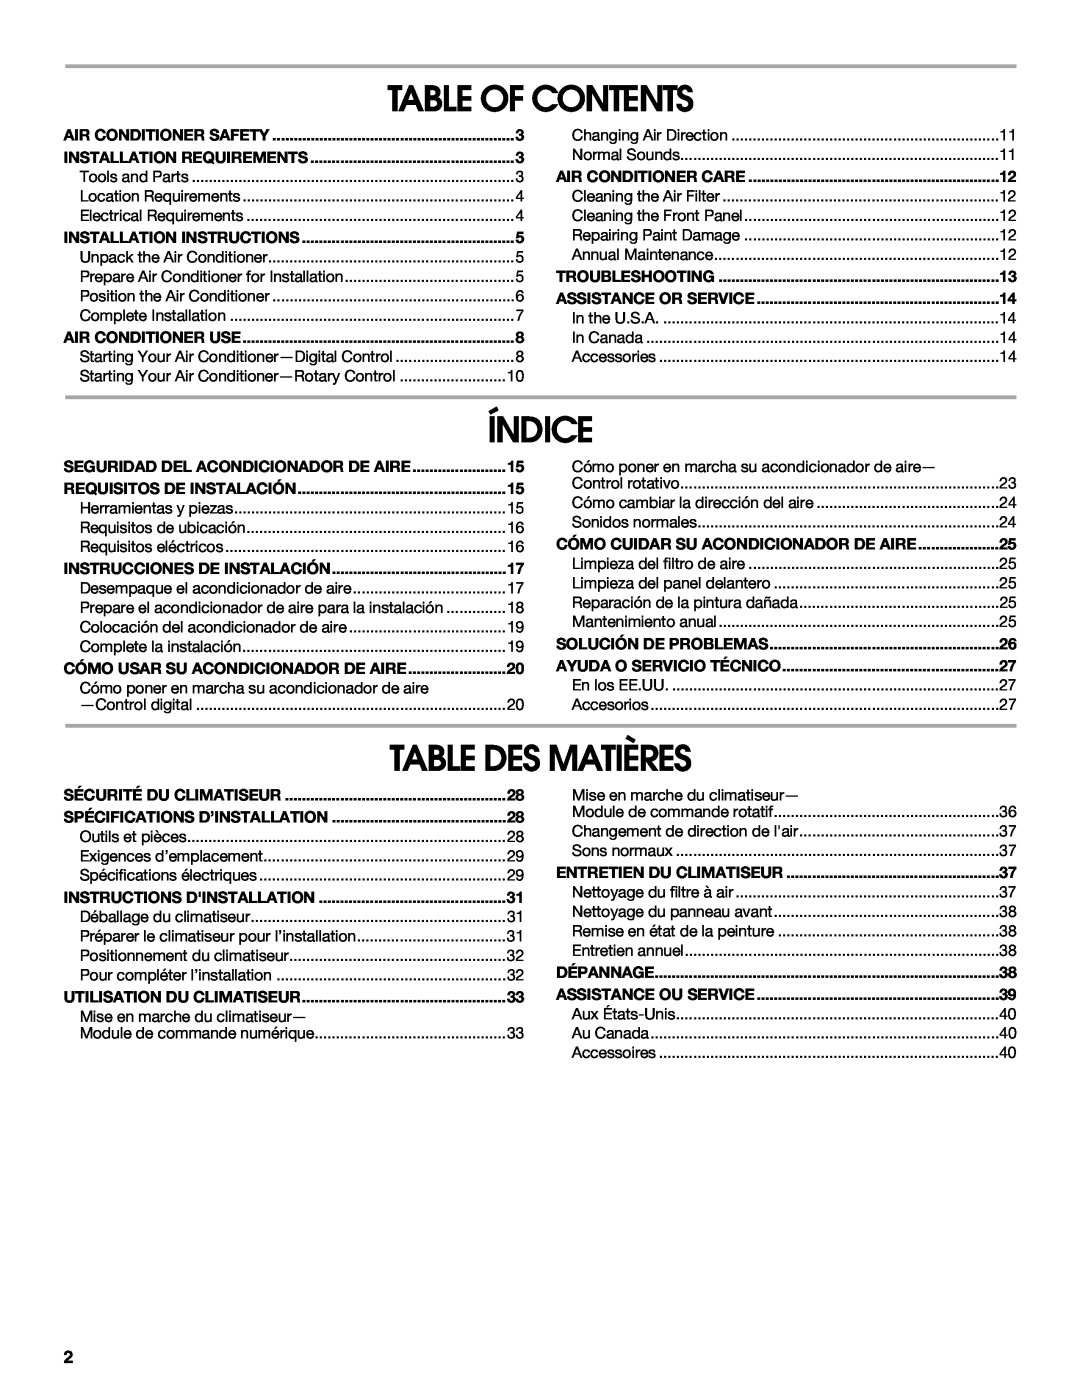 Whirlpool ACM052PS0 manual Table Of Contents, Índice, Table Des Matières 